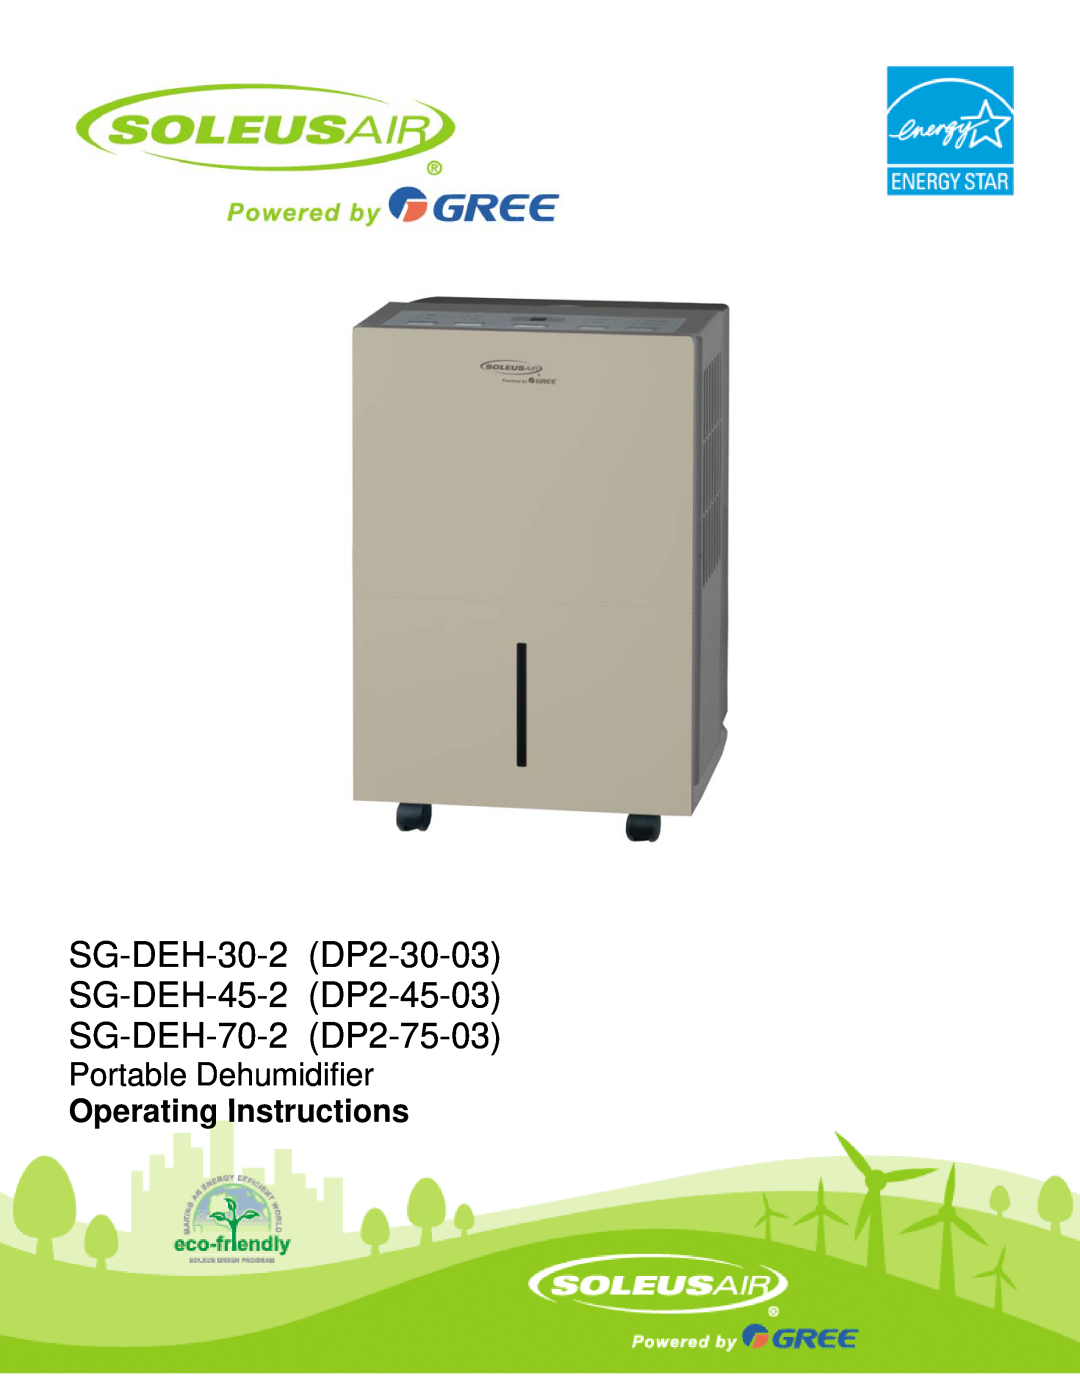 Soleus Air SG-DEH-45-2 (DP2-45-03), SG-DEH-70-2 (DP2-75-03) manual Portable Dehumidifier, Operating Instructions 